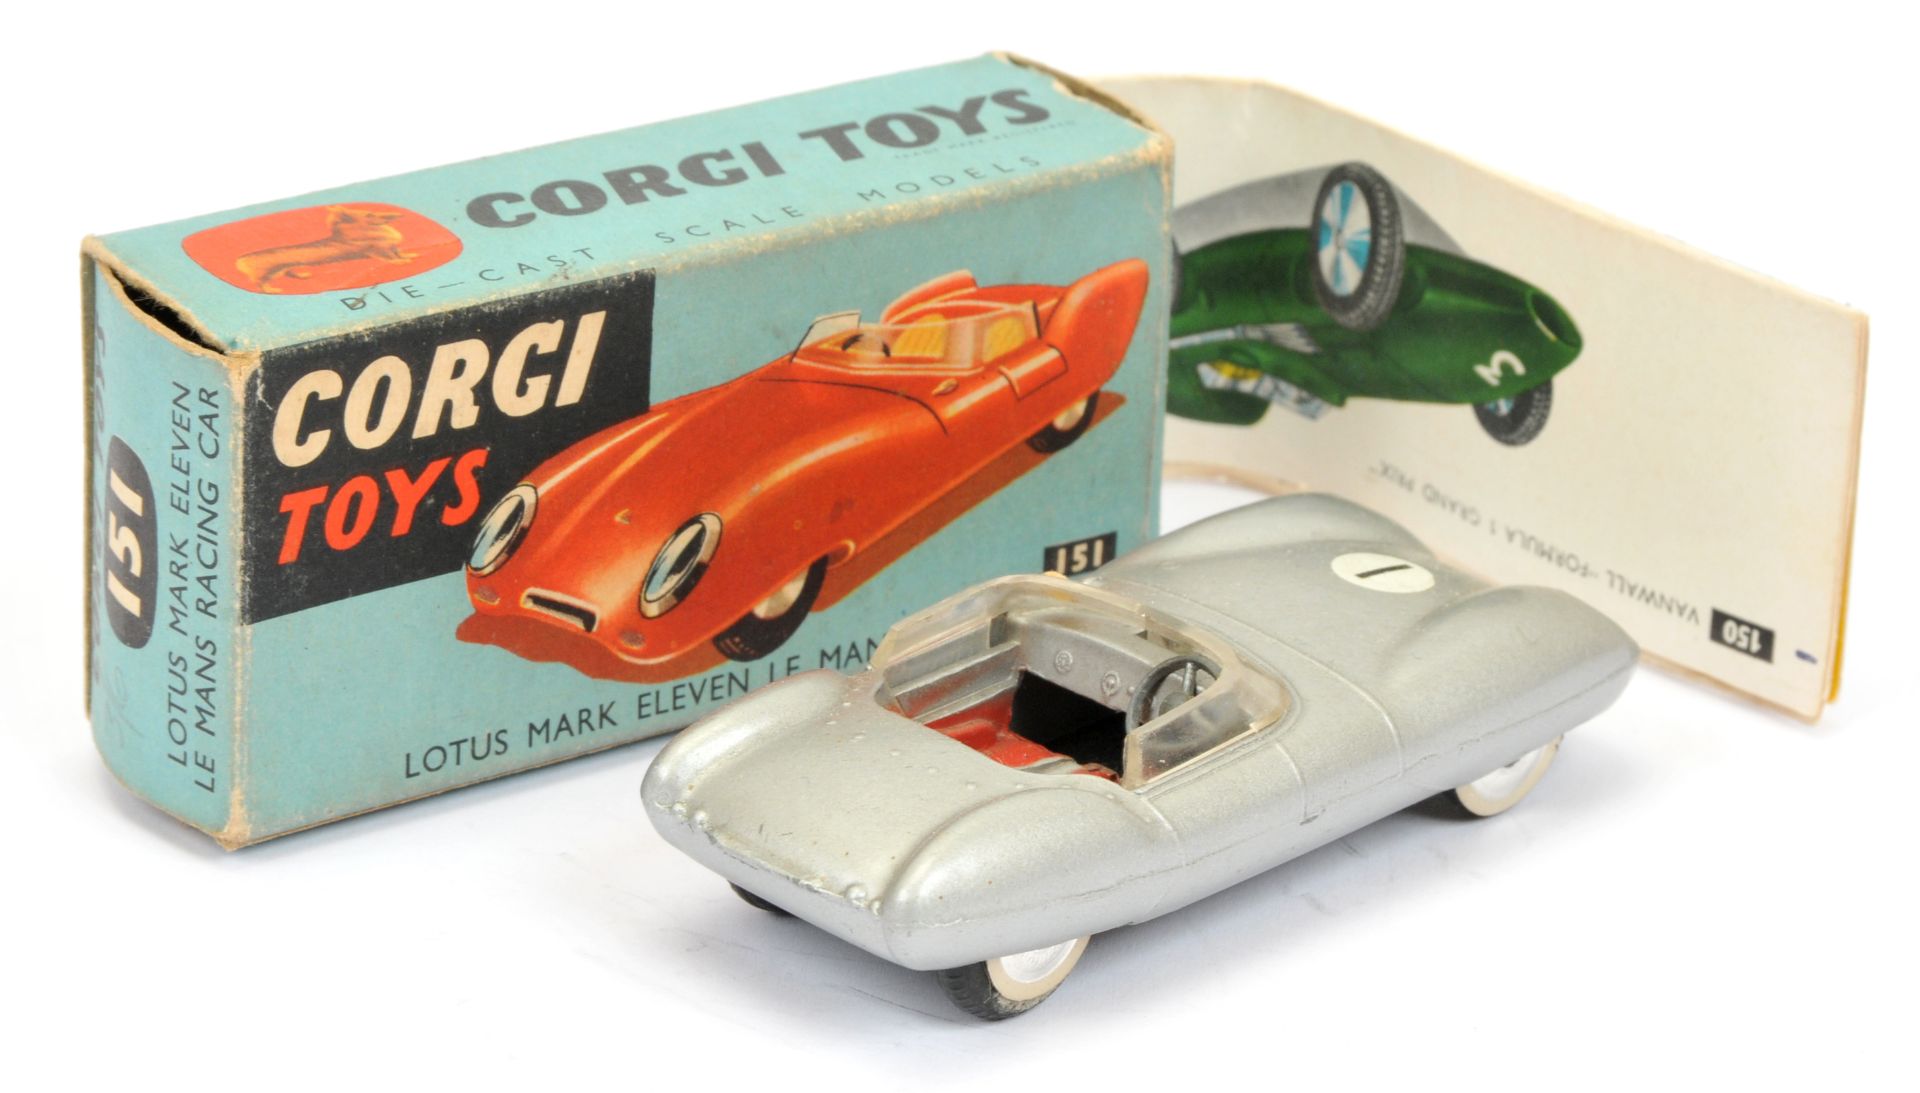 Corgi Toys 151 Lotus Mark 11 Le Mans Racing car - silver, red seats and trim, flat spun hubs - Image 2 of 2